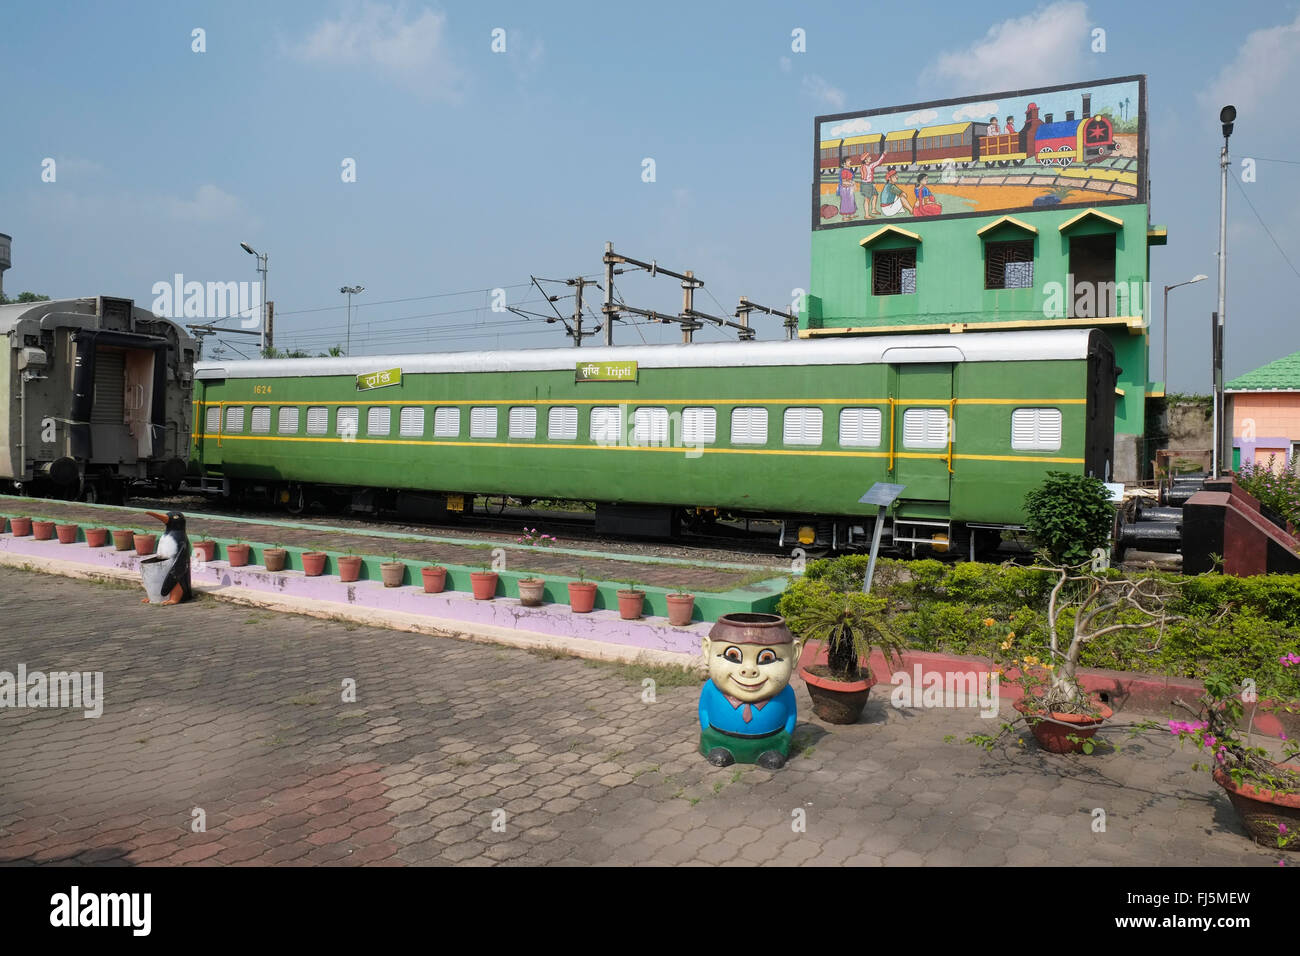 El Eastern Railway Museum, Howrah, Kolkata (Calcuta), Bengala Occidental, India. Foto de stock